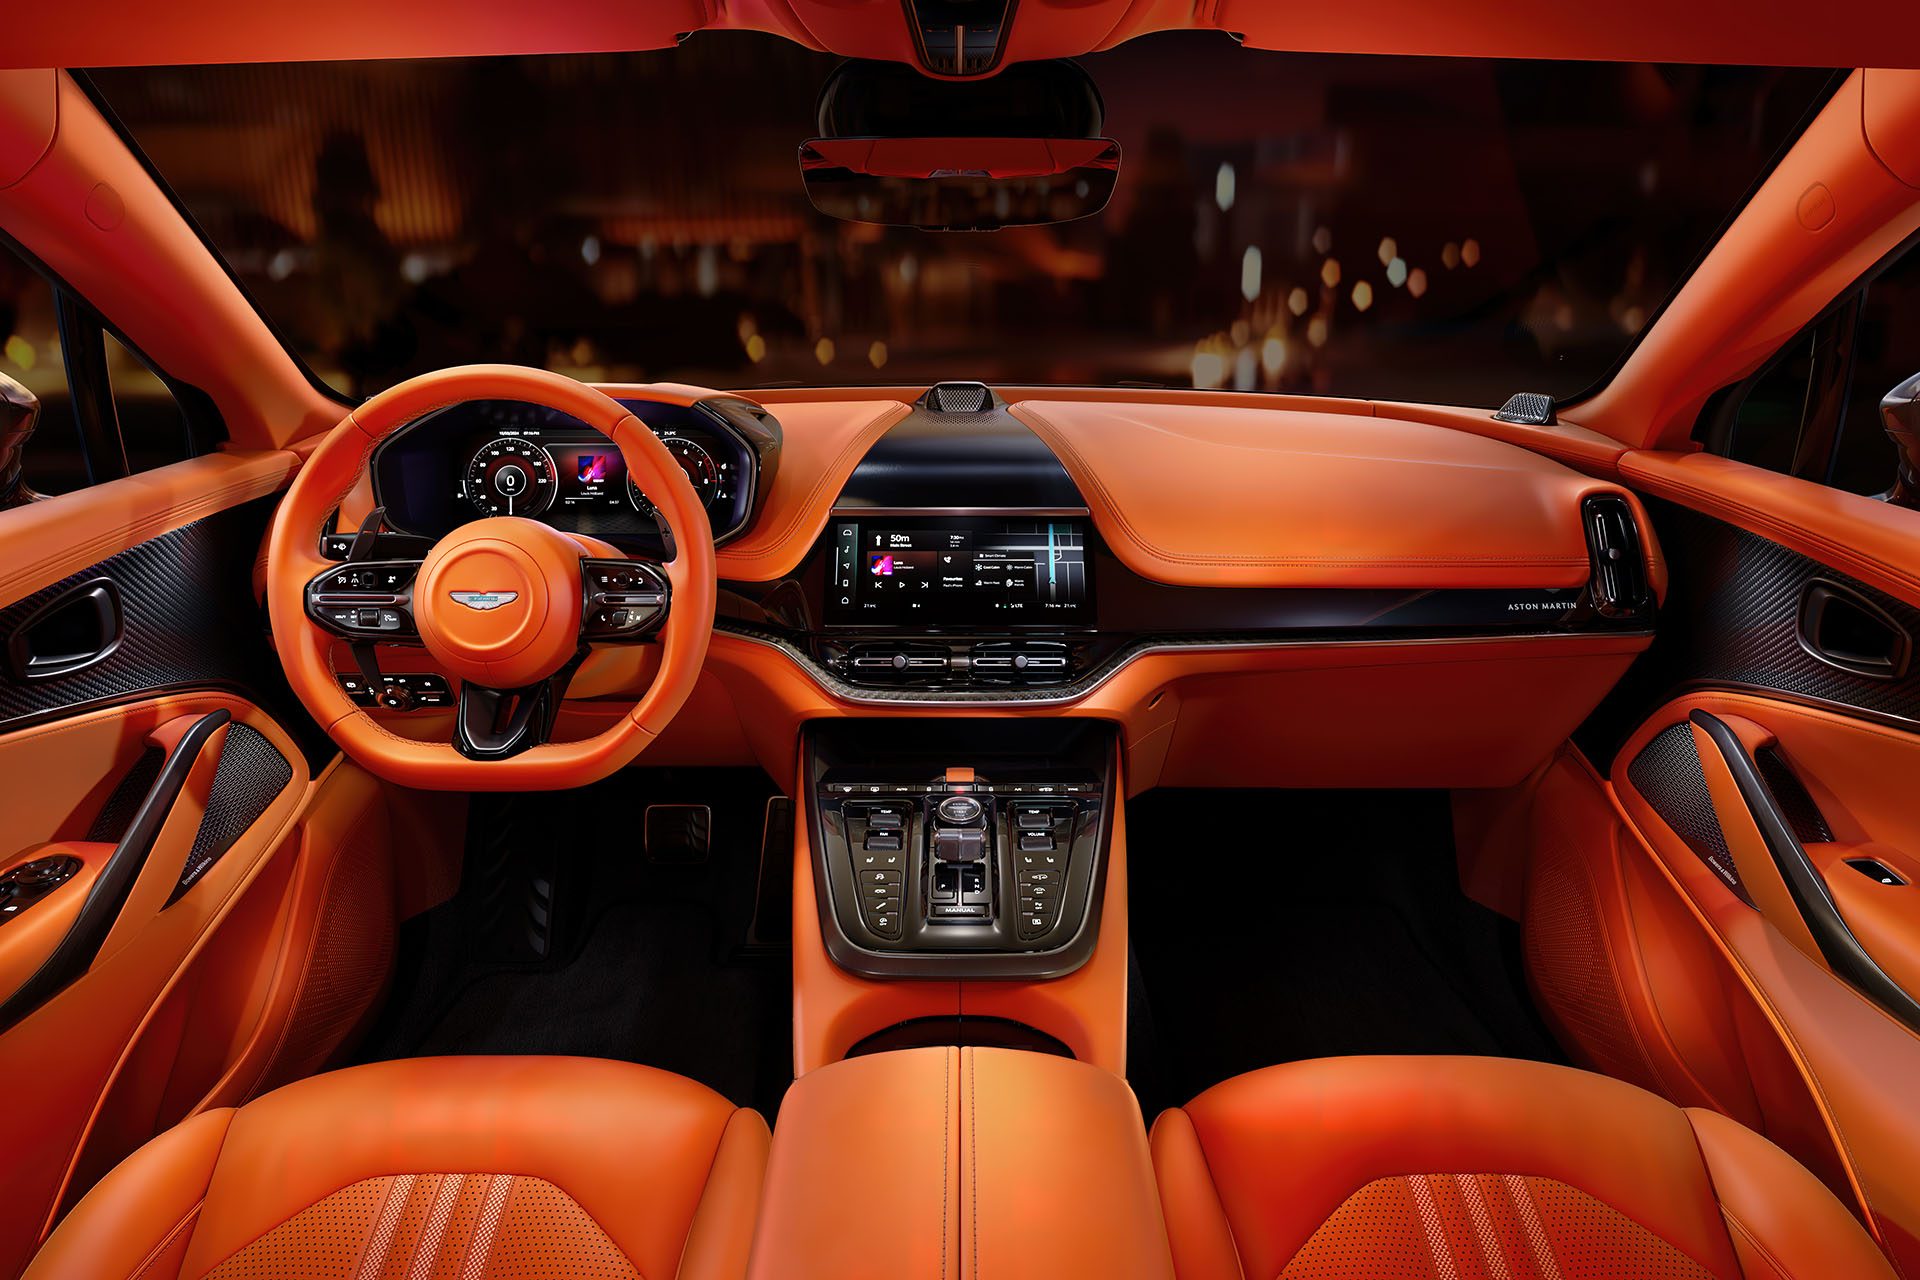 Don the sunglasses for the hot orange interior.